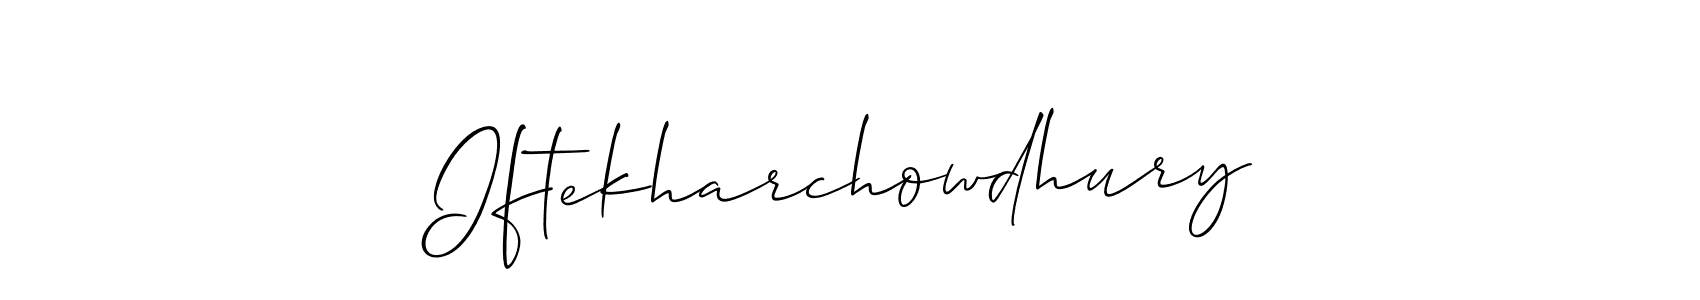 How to make Iftekharchowdhury signature? Allison_Script is a professional autograph style. Create handwritten signature for Iftekharchowdhury name. Iftekharchowdhury signature style 2 images and pictures png